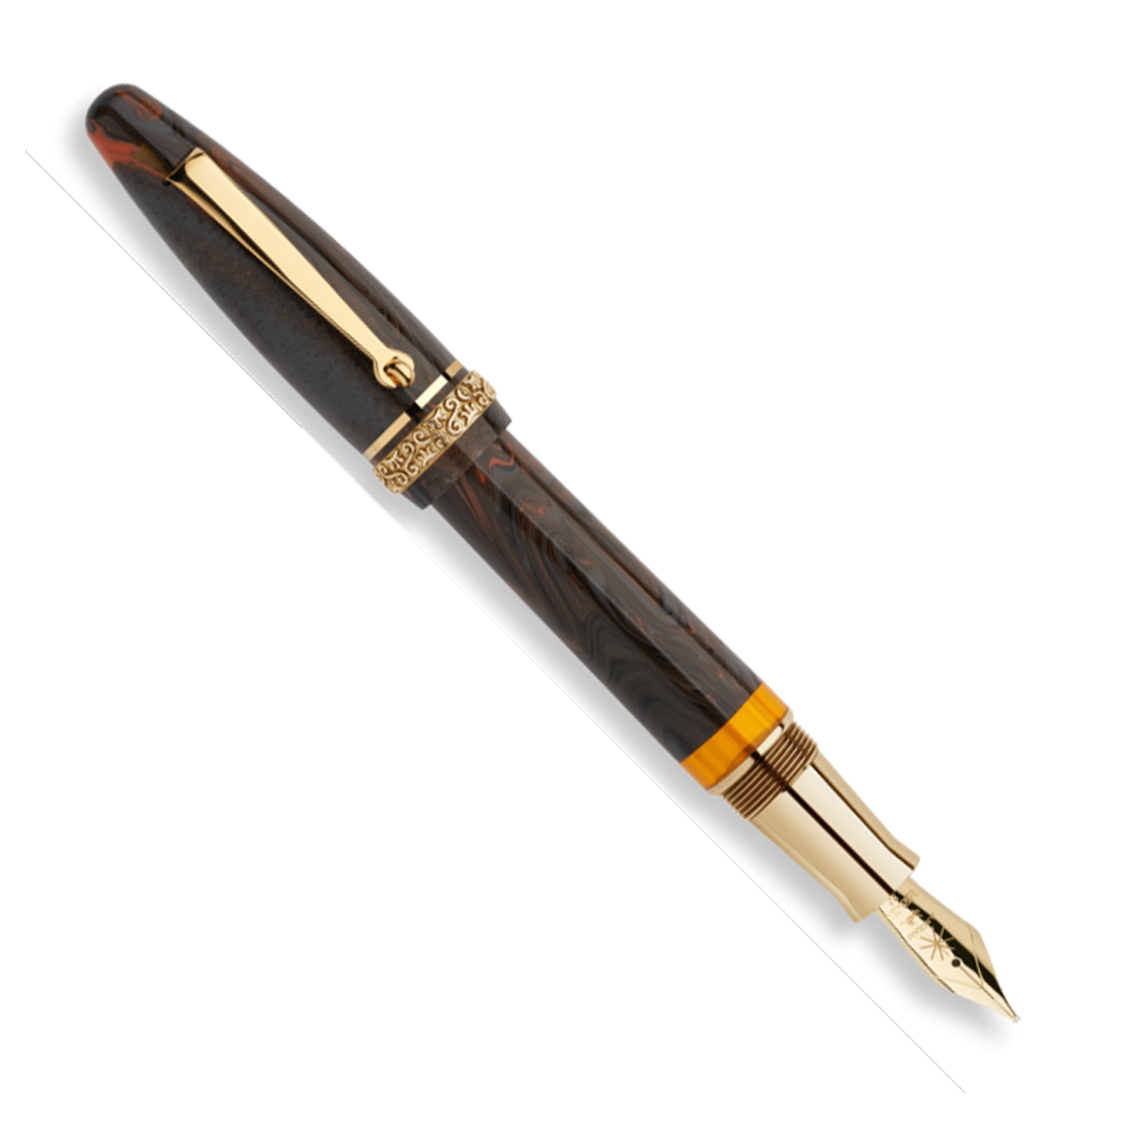 Maiora Ogiva Golden Age Brown/Orange w/Gold Trim (Earth) - Fountain Pen (14k Nib - Piston Fill)